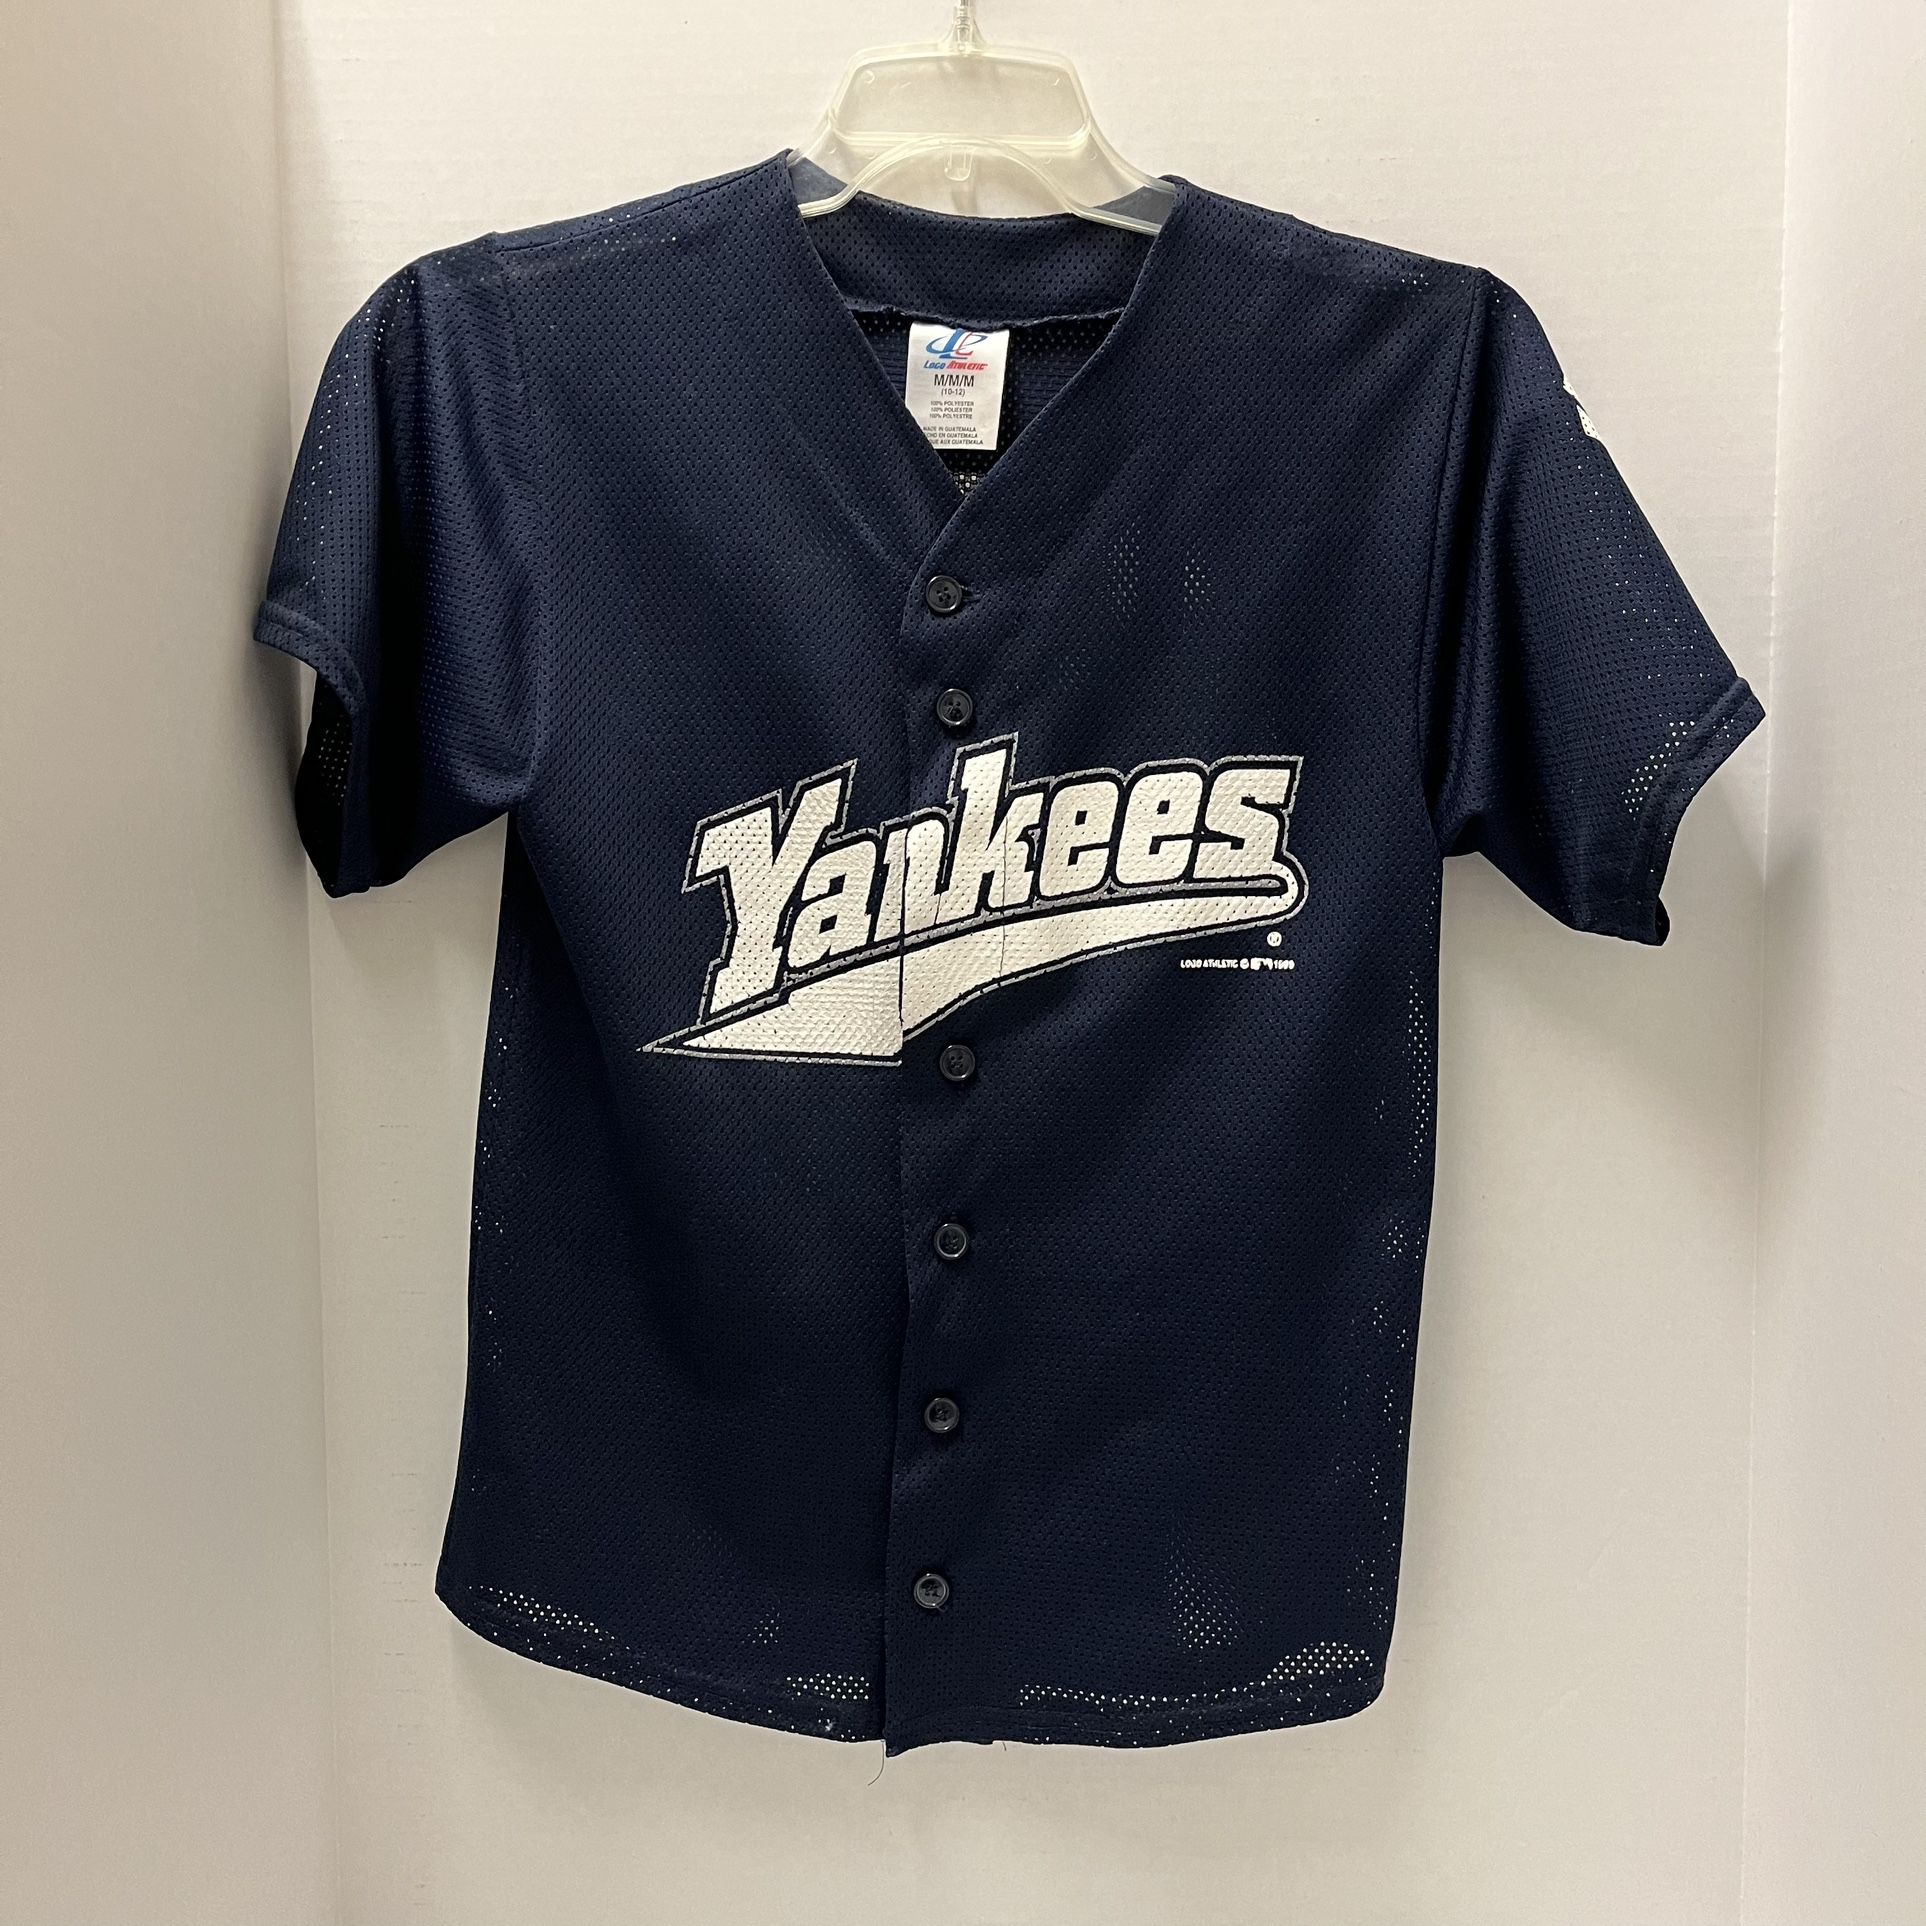 Yankee Shirt In Youth Size Medium (10-12)